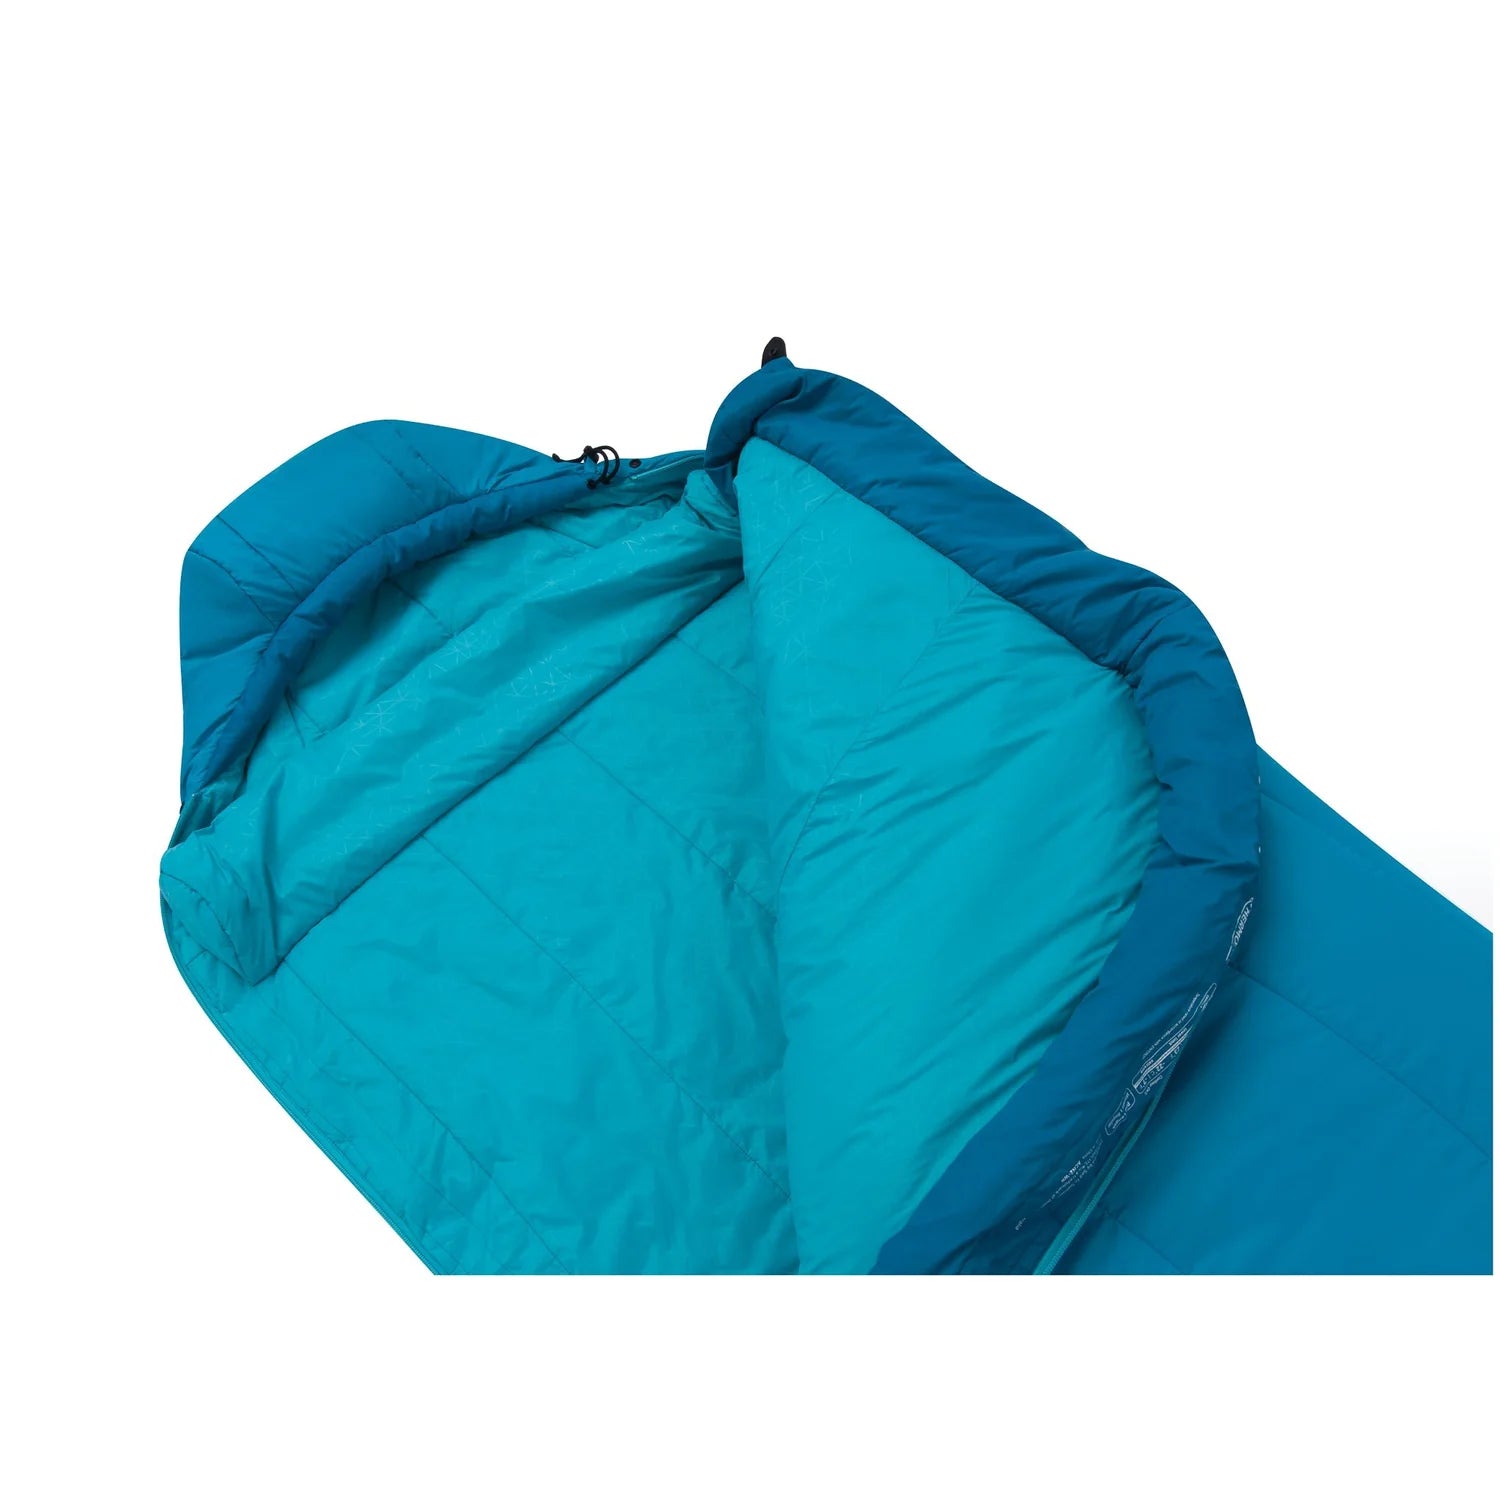 Sea to Summit Venture synthetic sleeping bag for women Regular